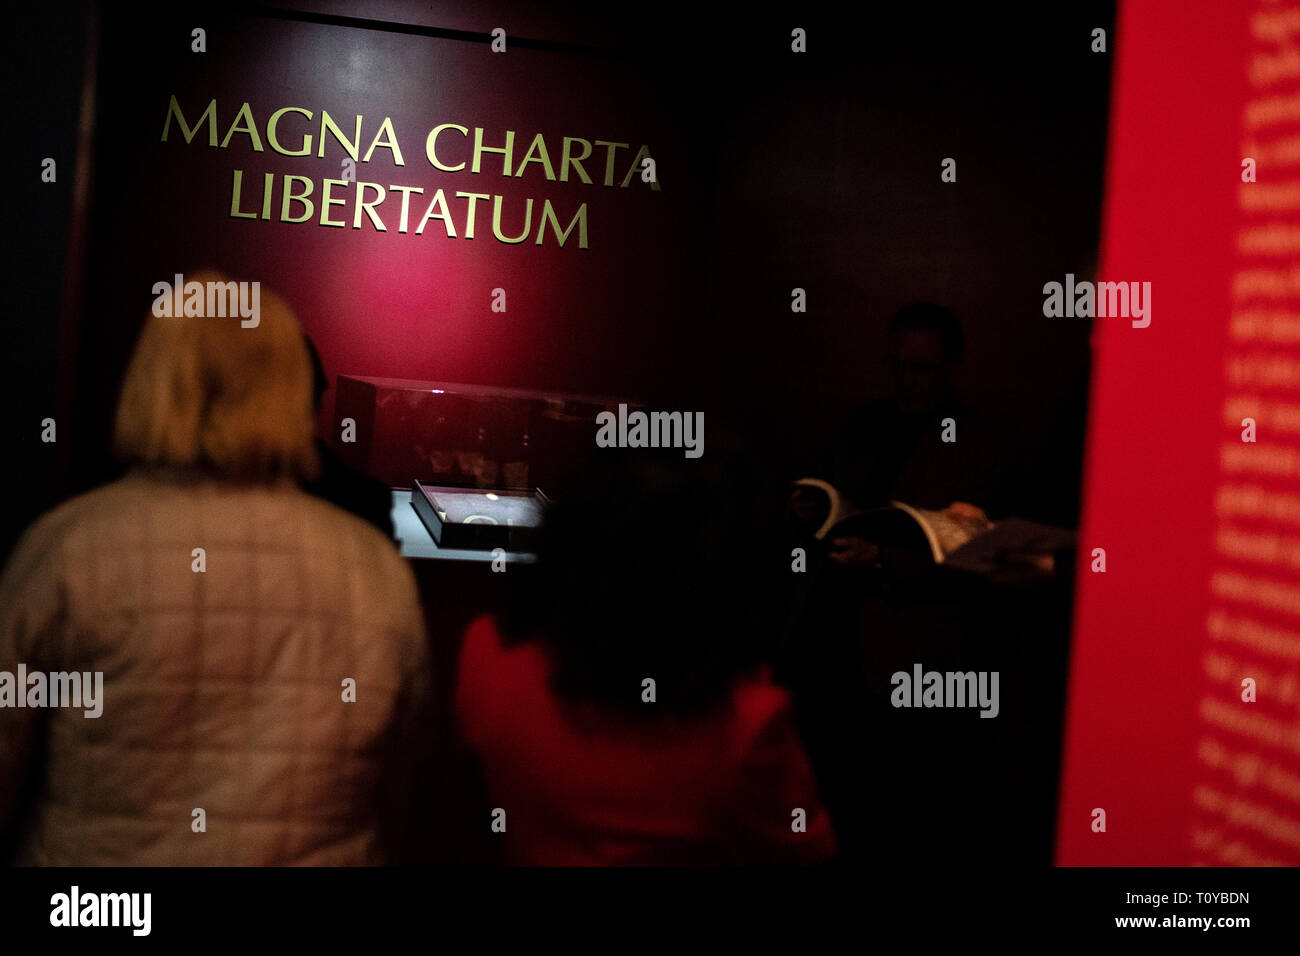 Magna charta libertatum hi-res stock photography and images - Alamy